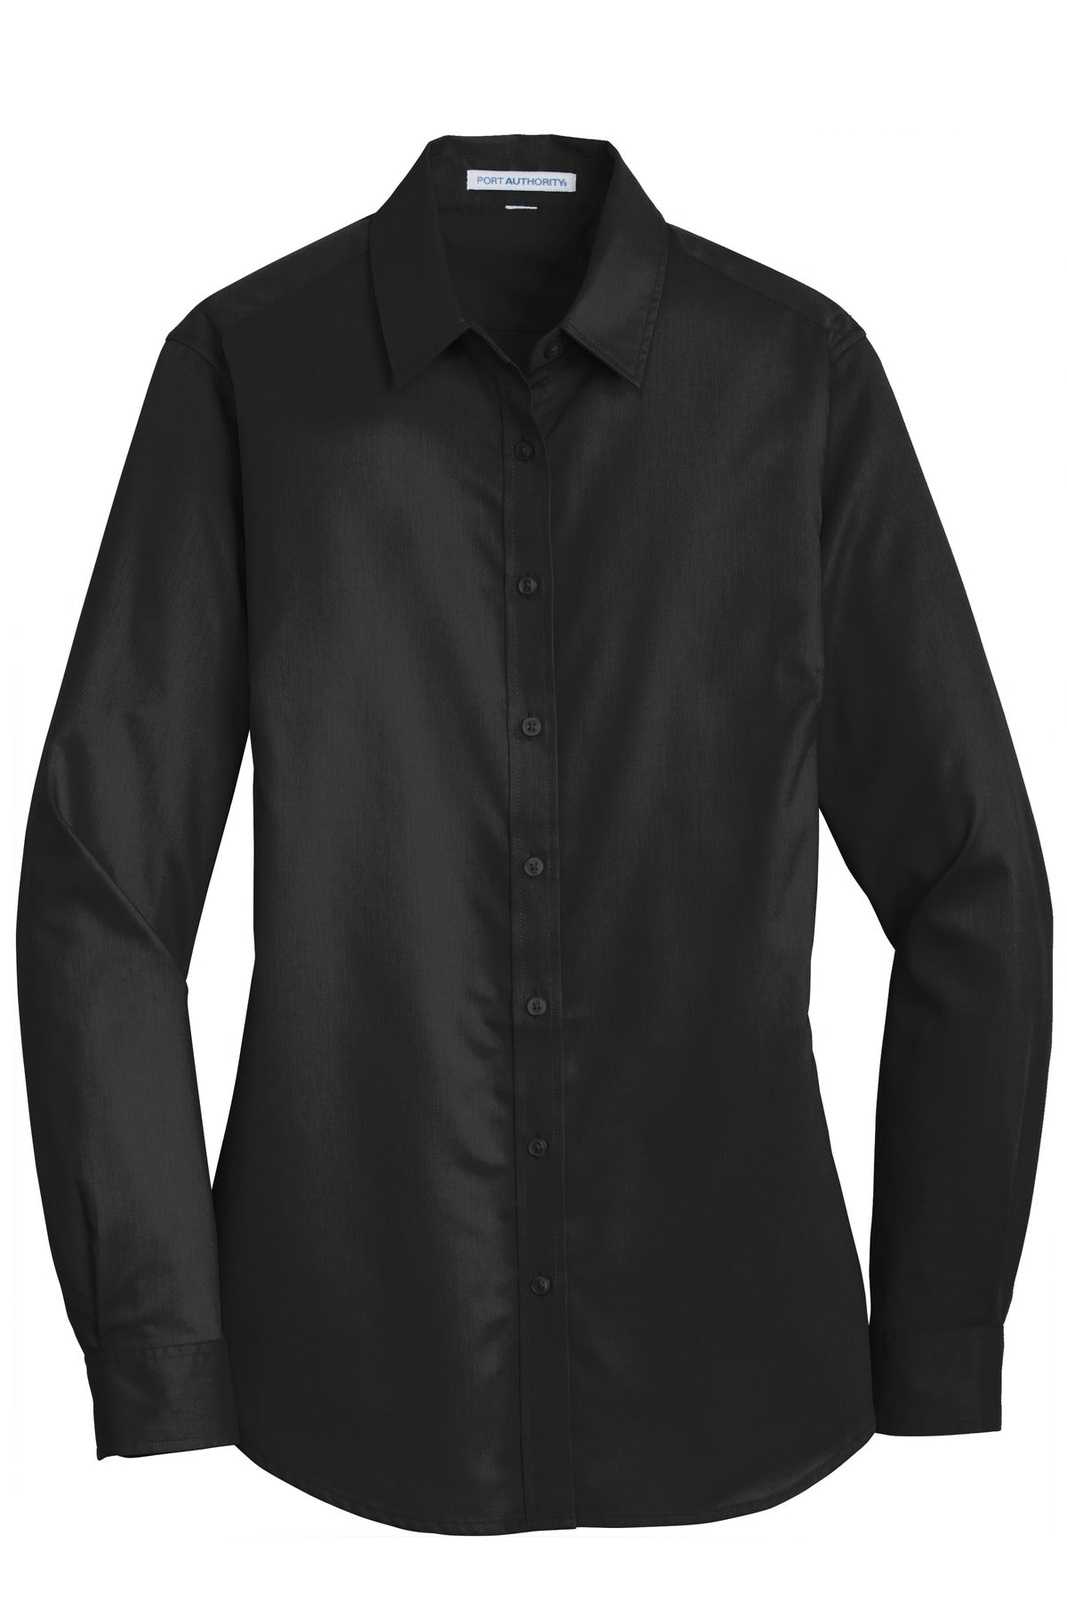 Port Authority L663 Ladies Superpro Twill Shirt - Black - HIT a Double - 5